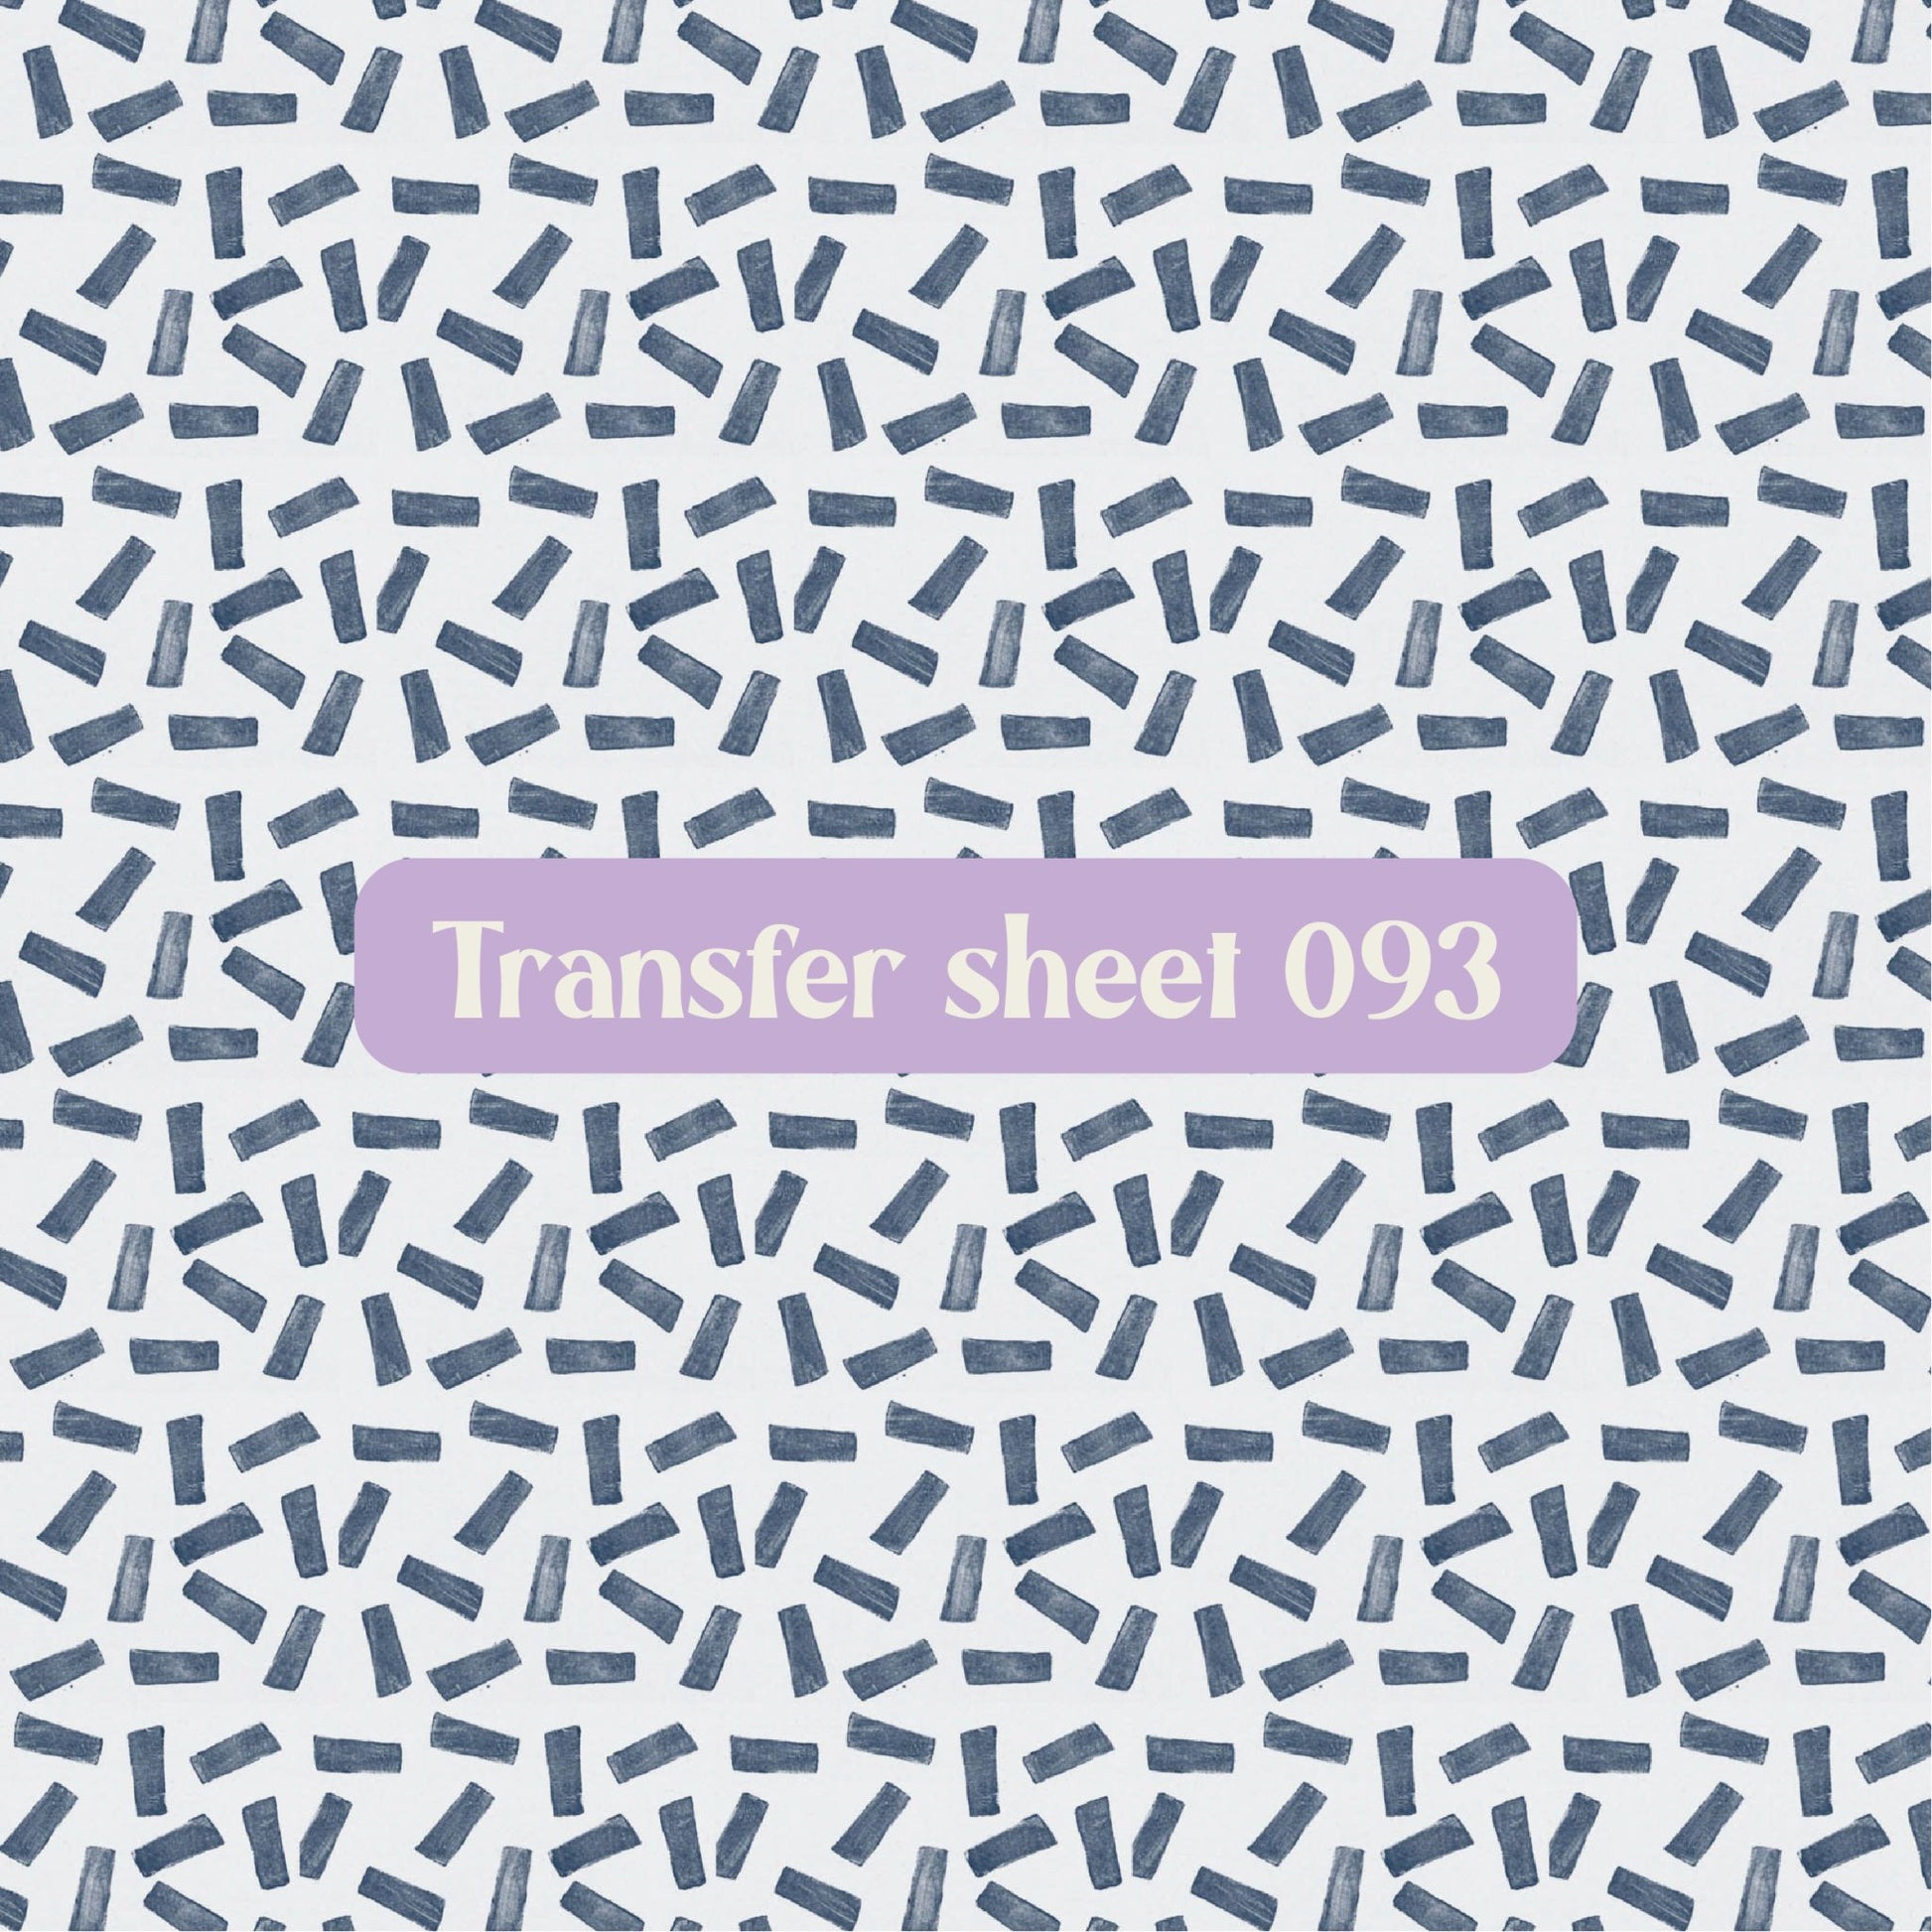 Transfer sheet 093 - Transfer paper - CLN Atelier